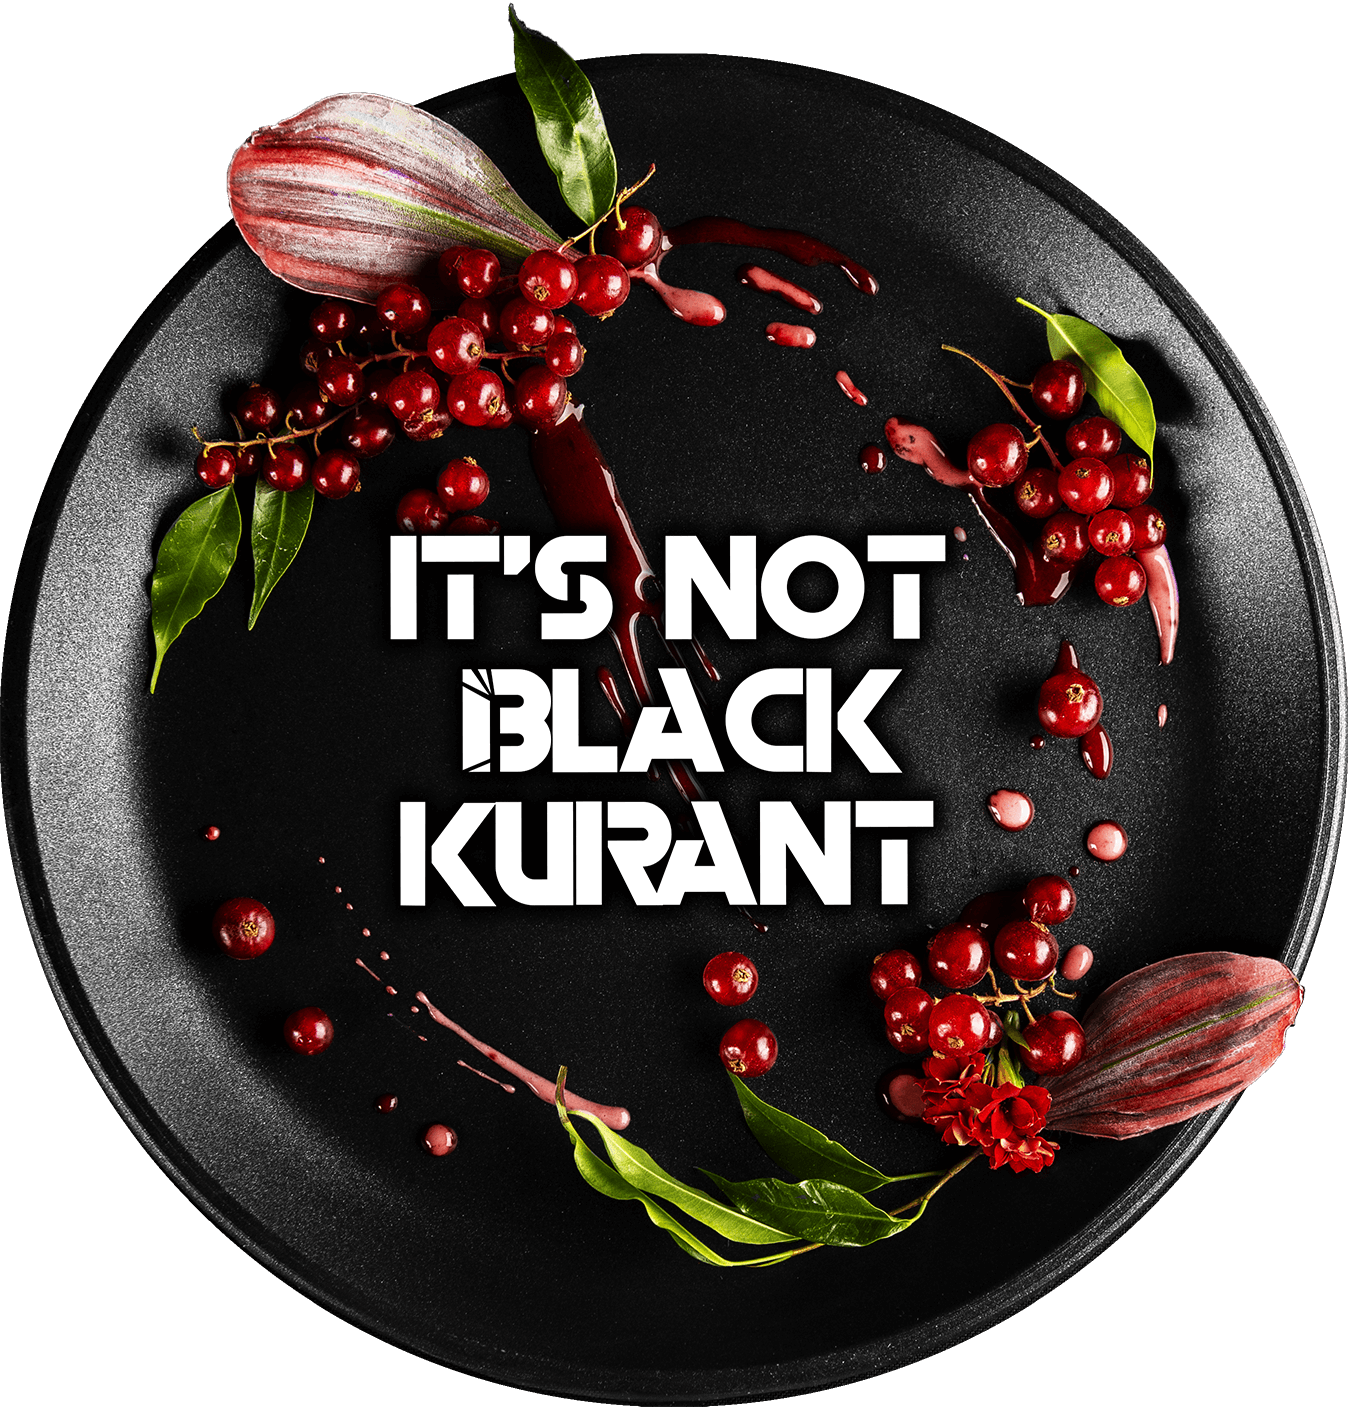 Black Burn Tabak 25g Its not Black Kurant